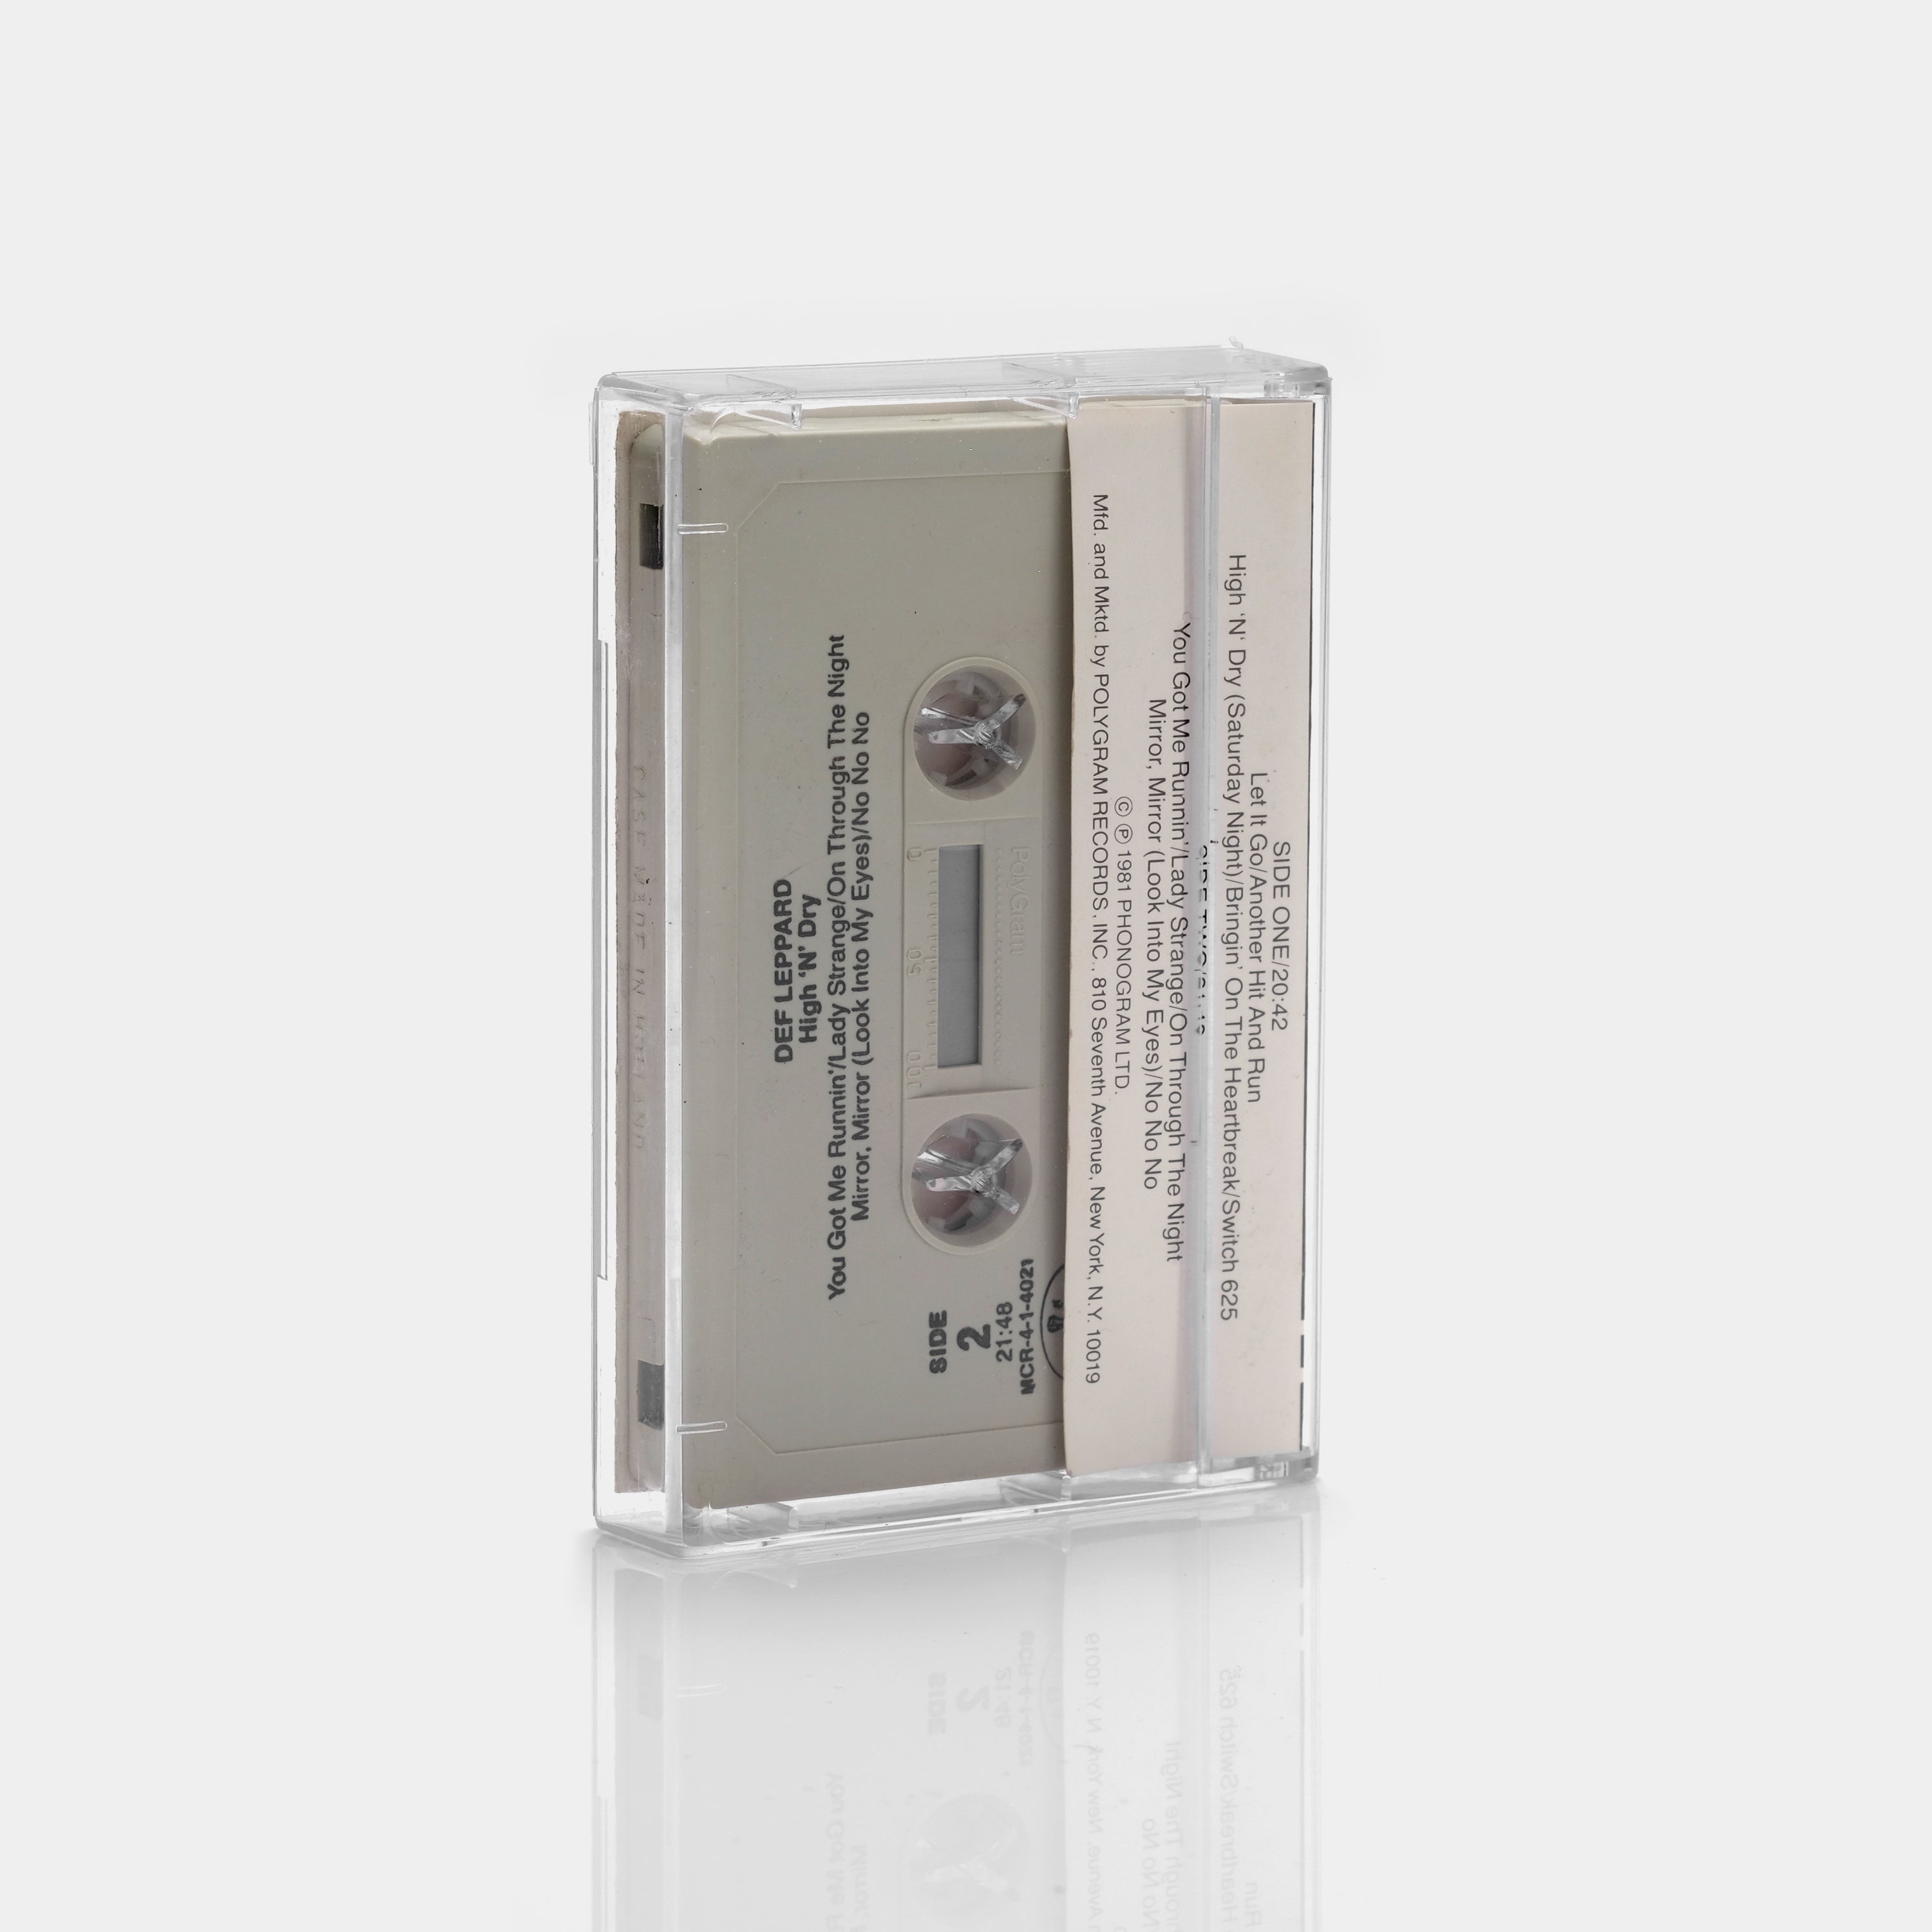 Def Leppard - High 'N' Dry Cassette Tape